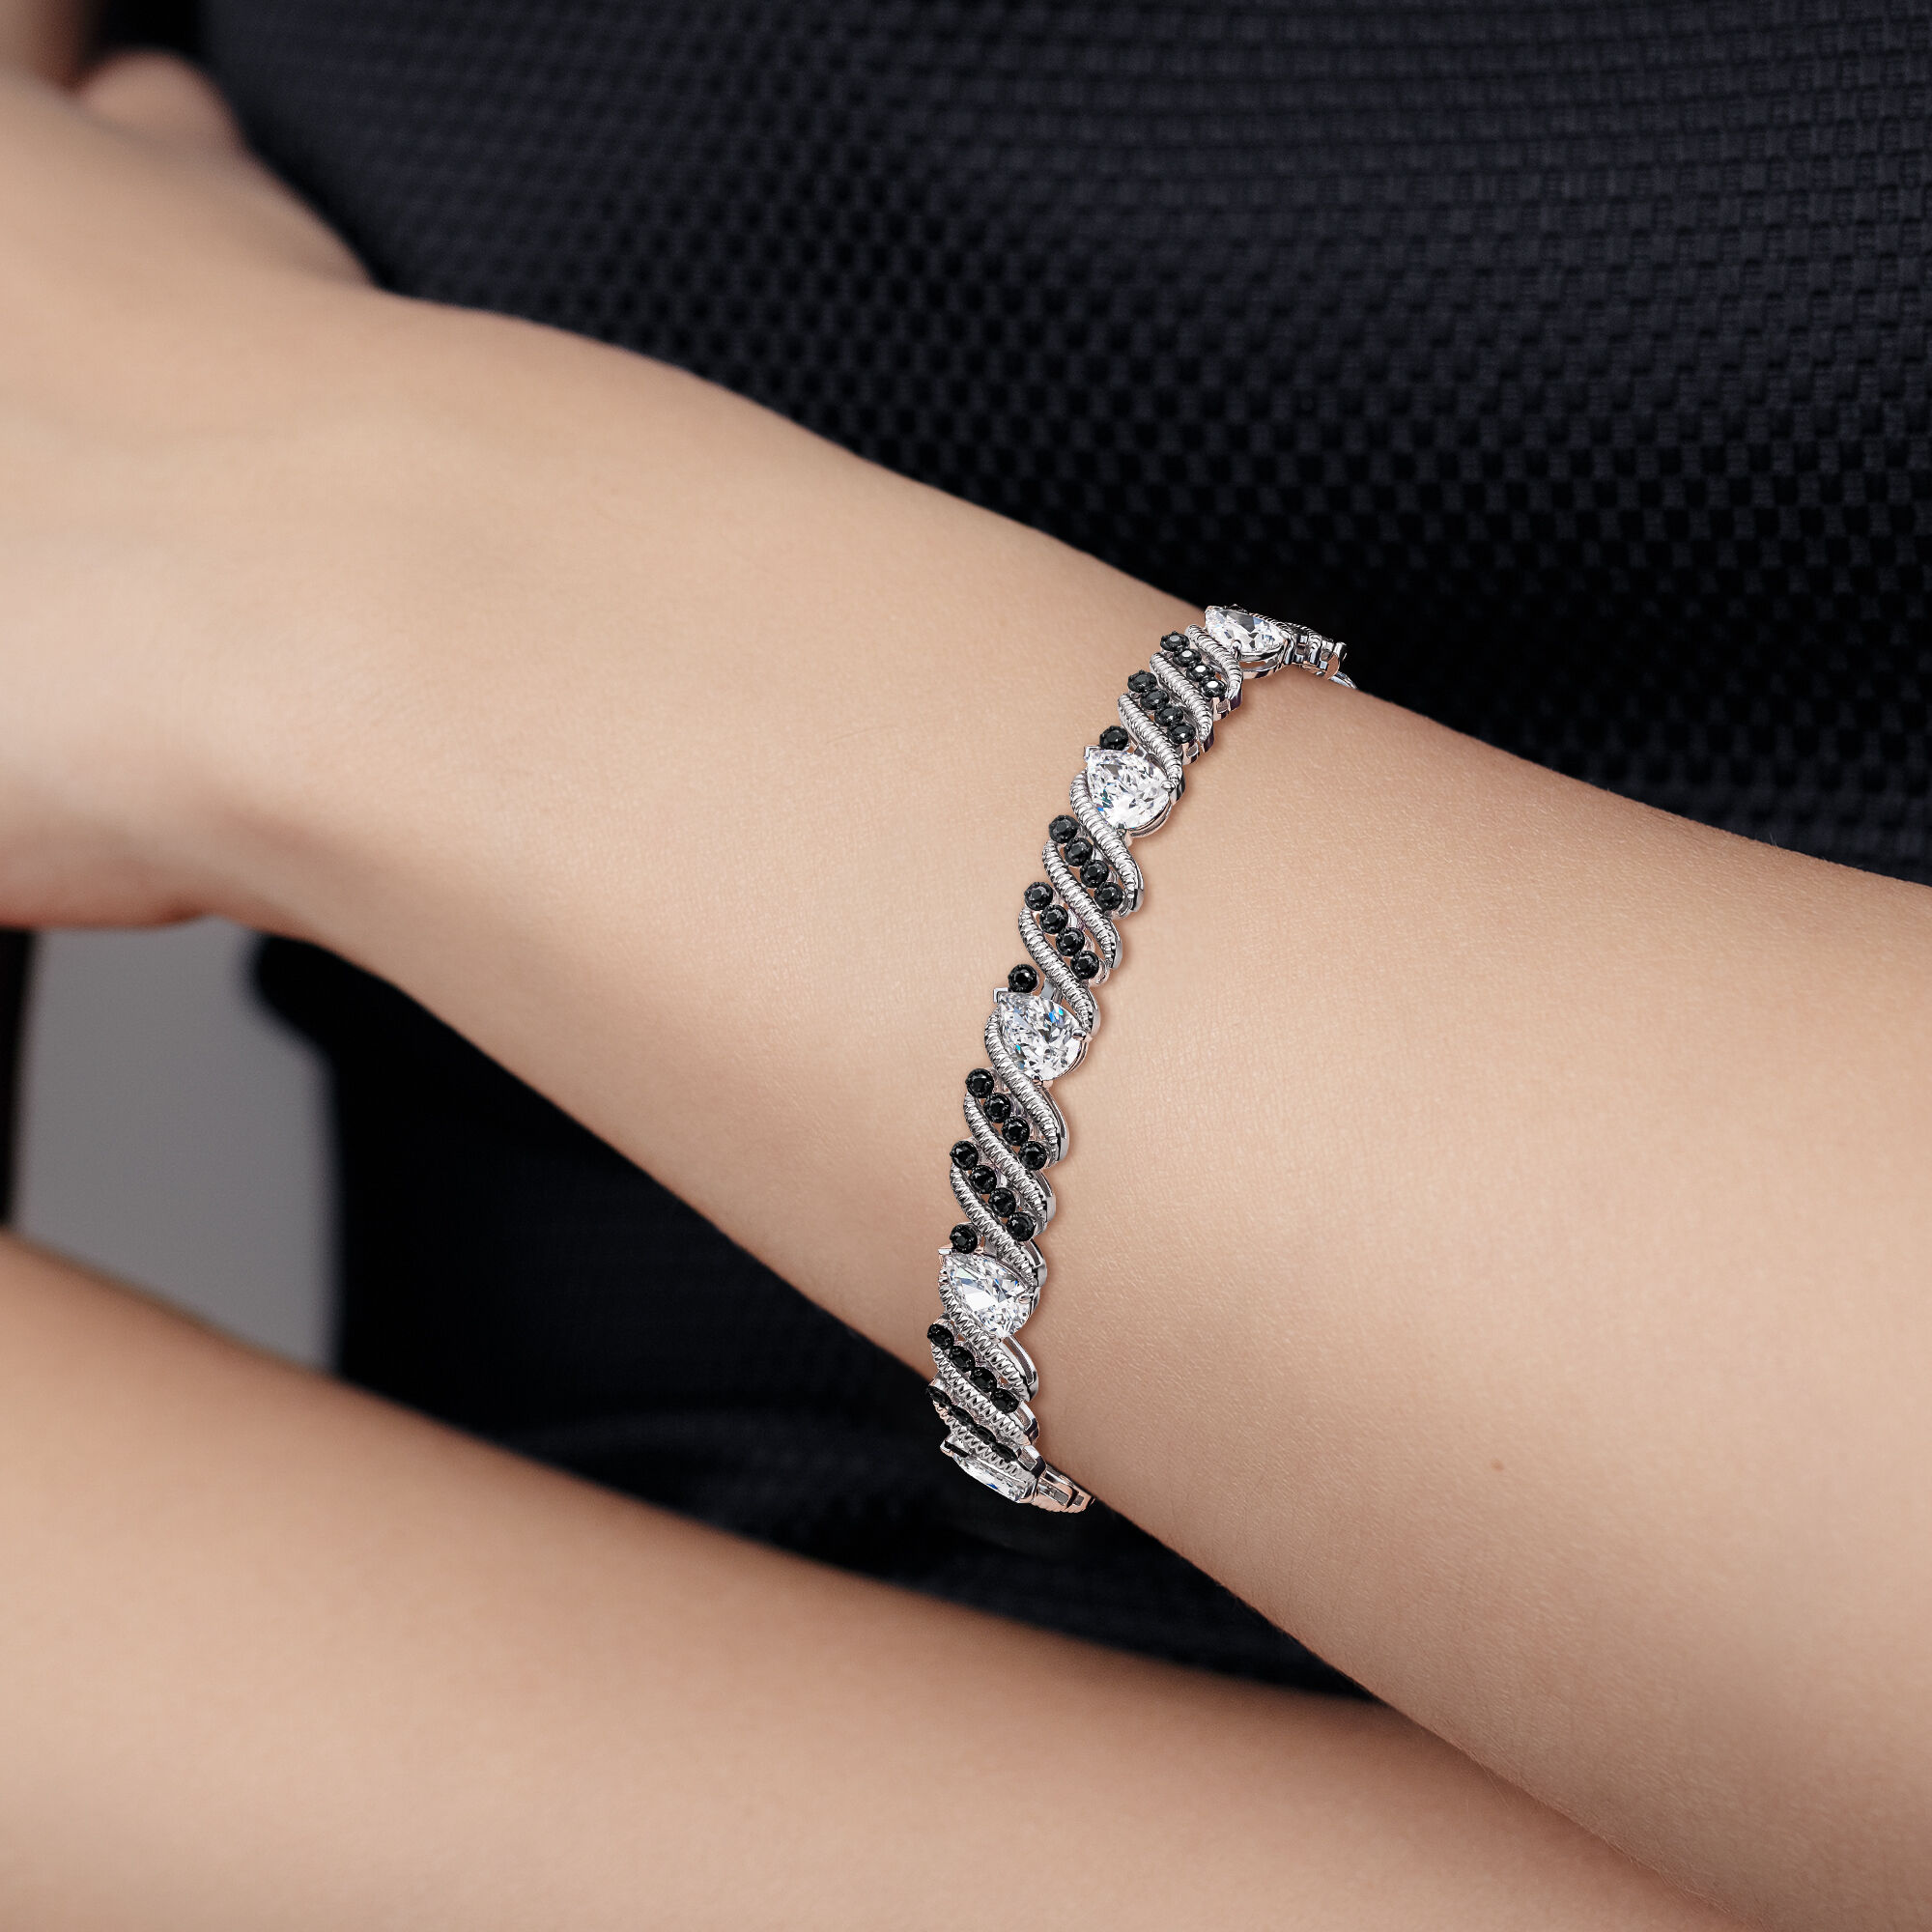 Personalized Black Diamond and Birthstone Bracelet 10776 0019 m model